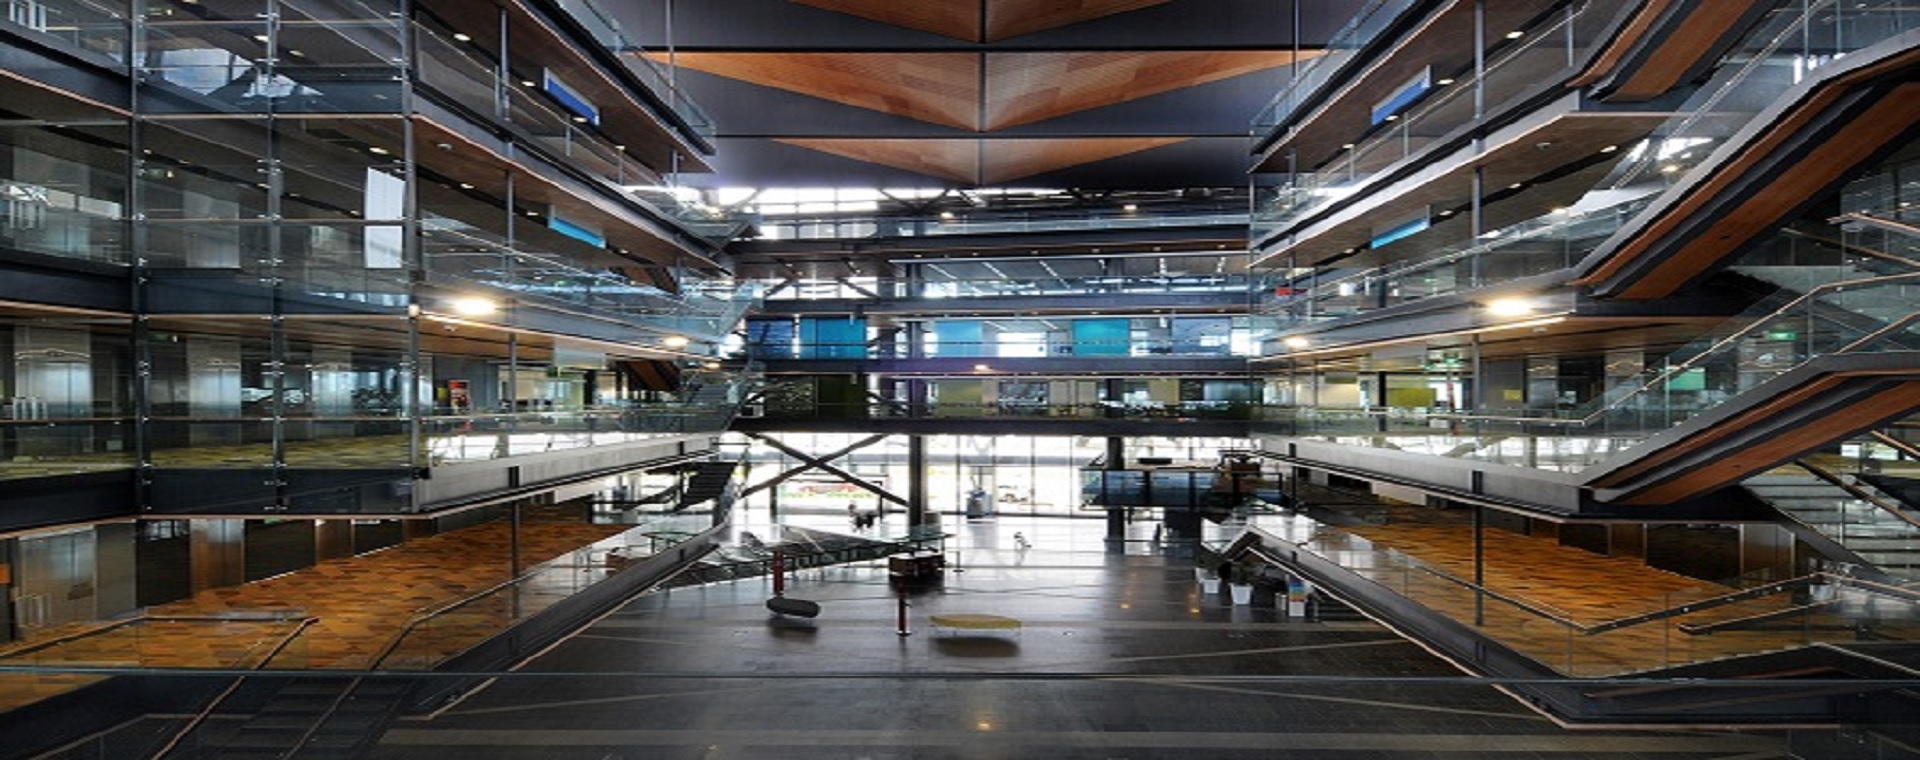 Main atrium at Manukau Instatute of Technology (MIT)